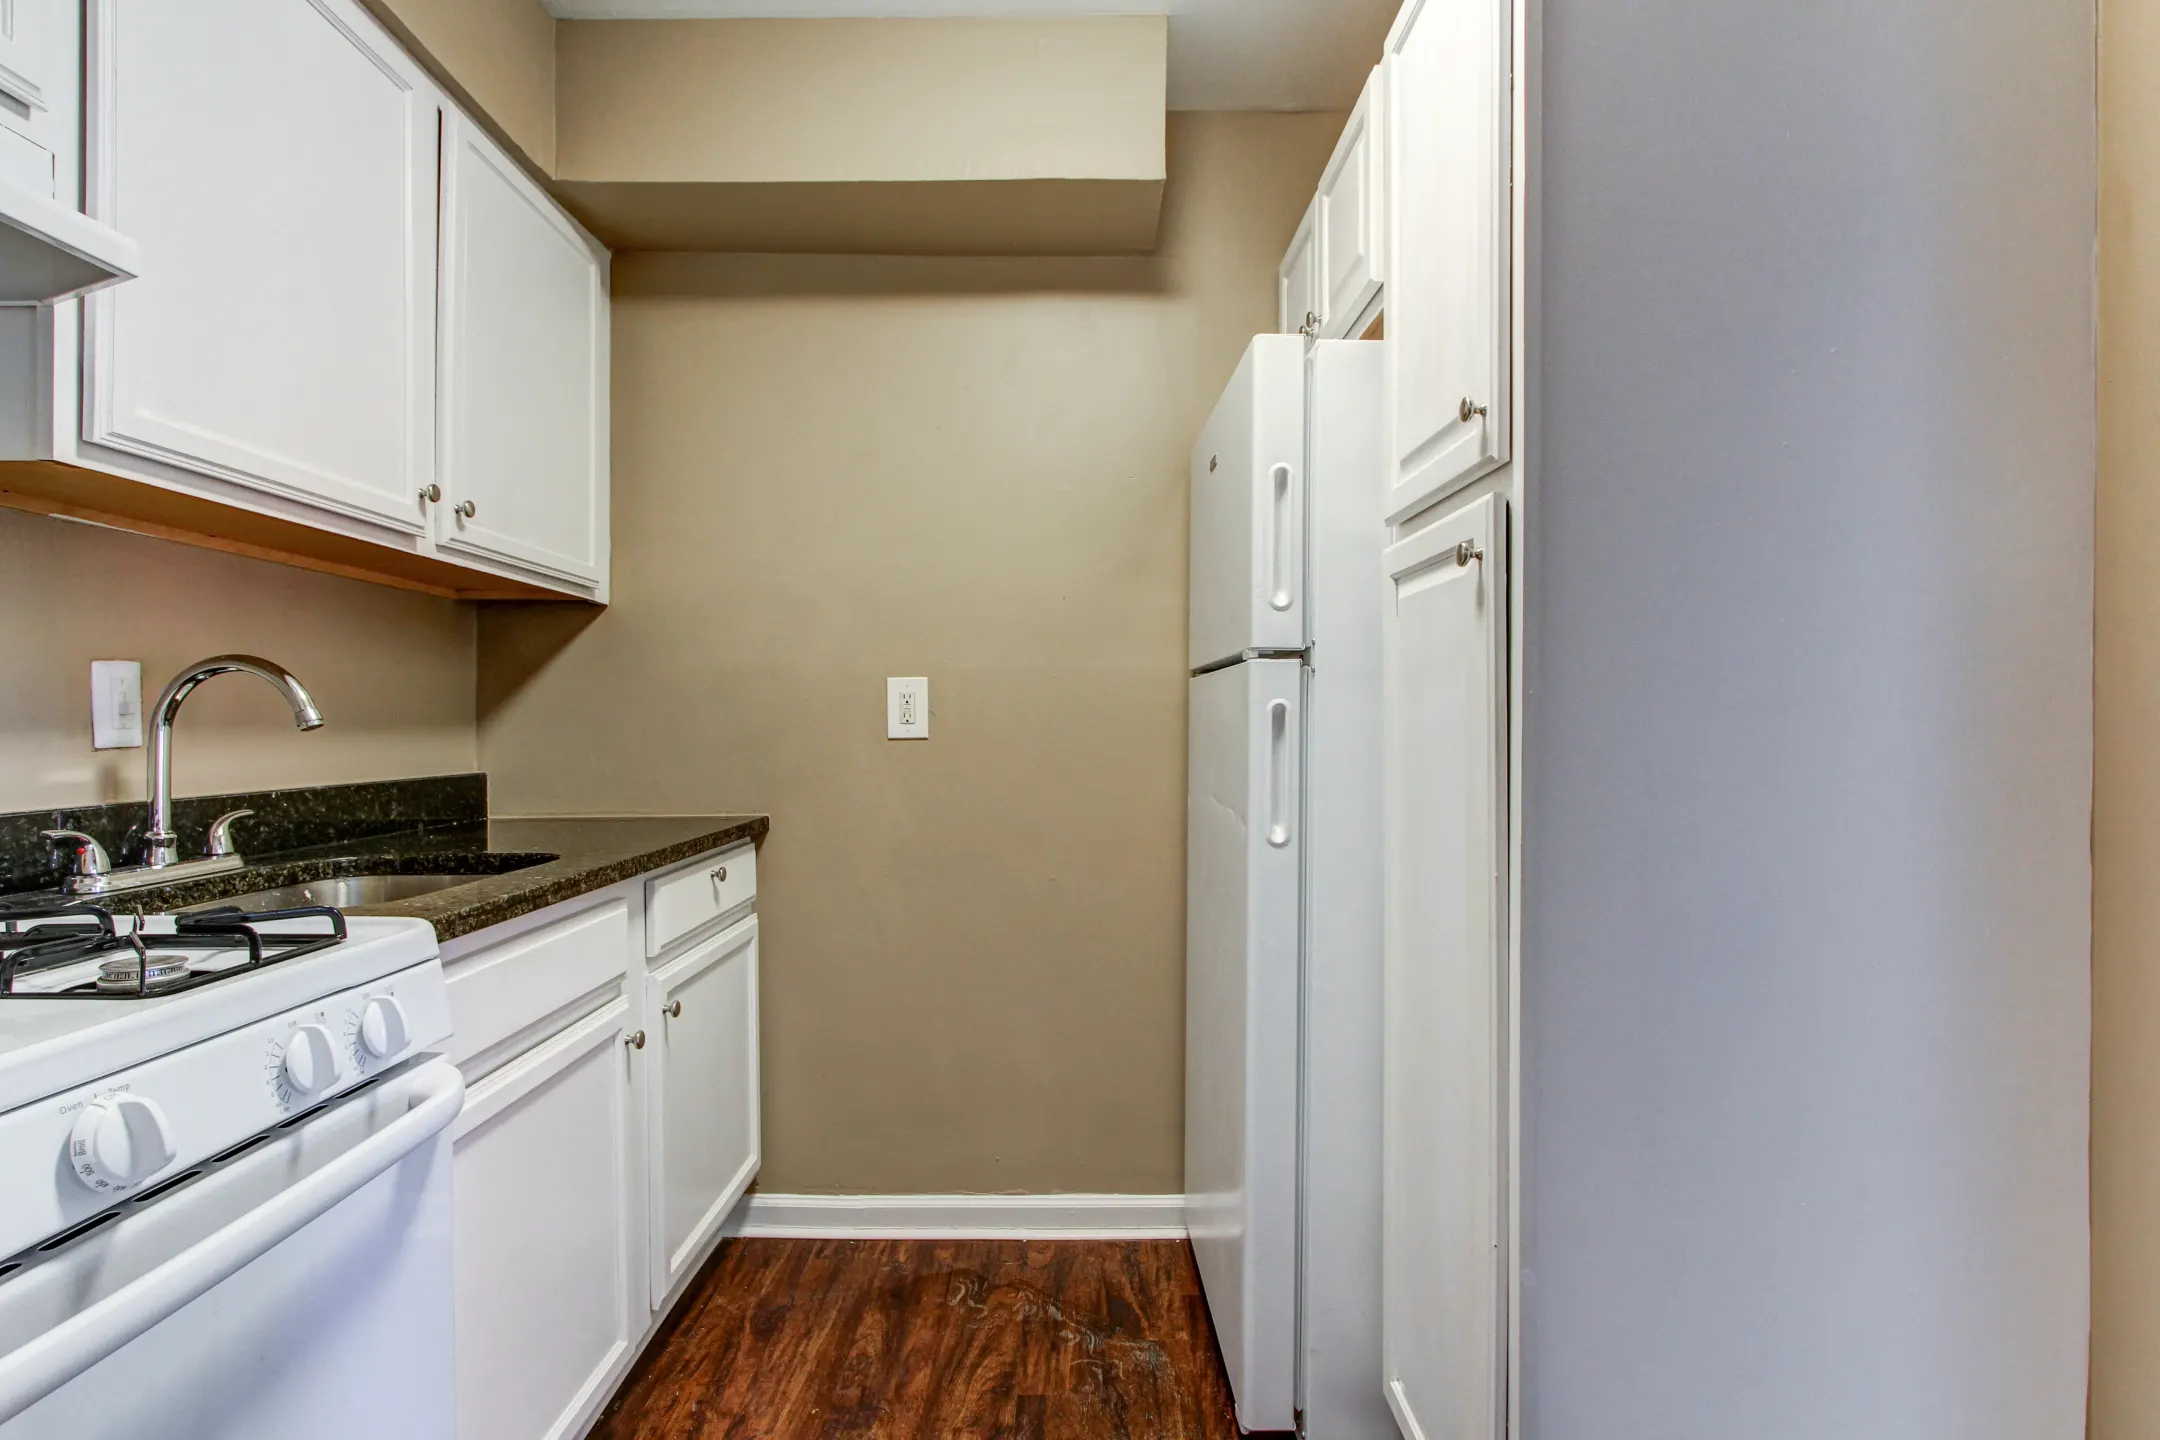 Kitchen - Bass Place Apartment Homes - Washington, DC